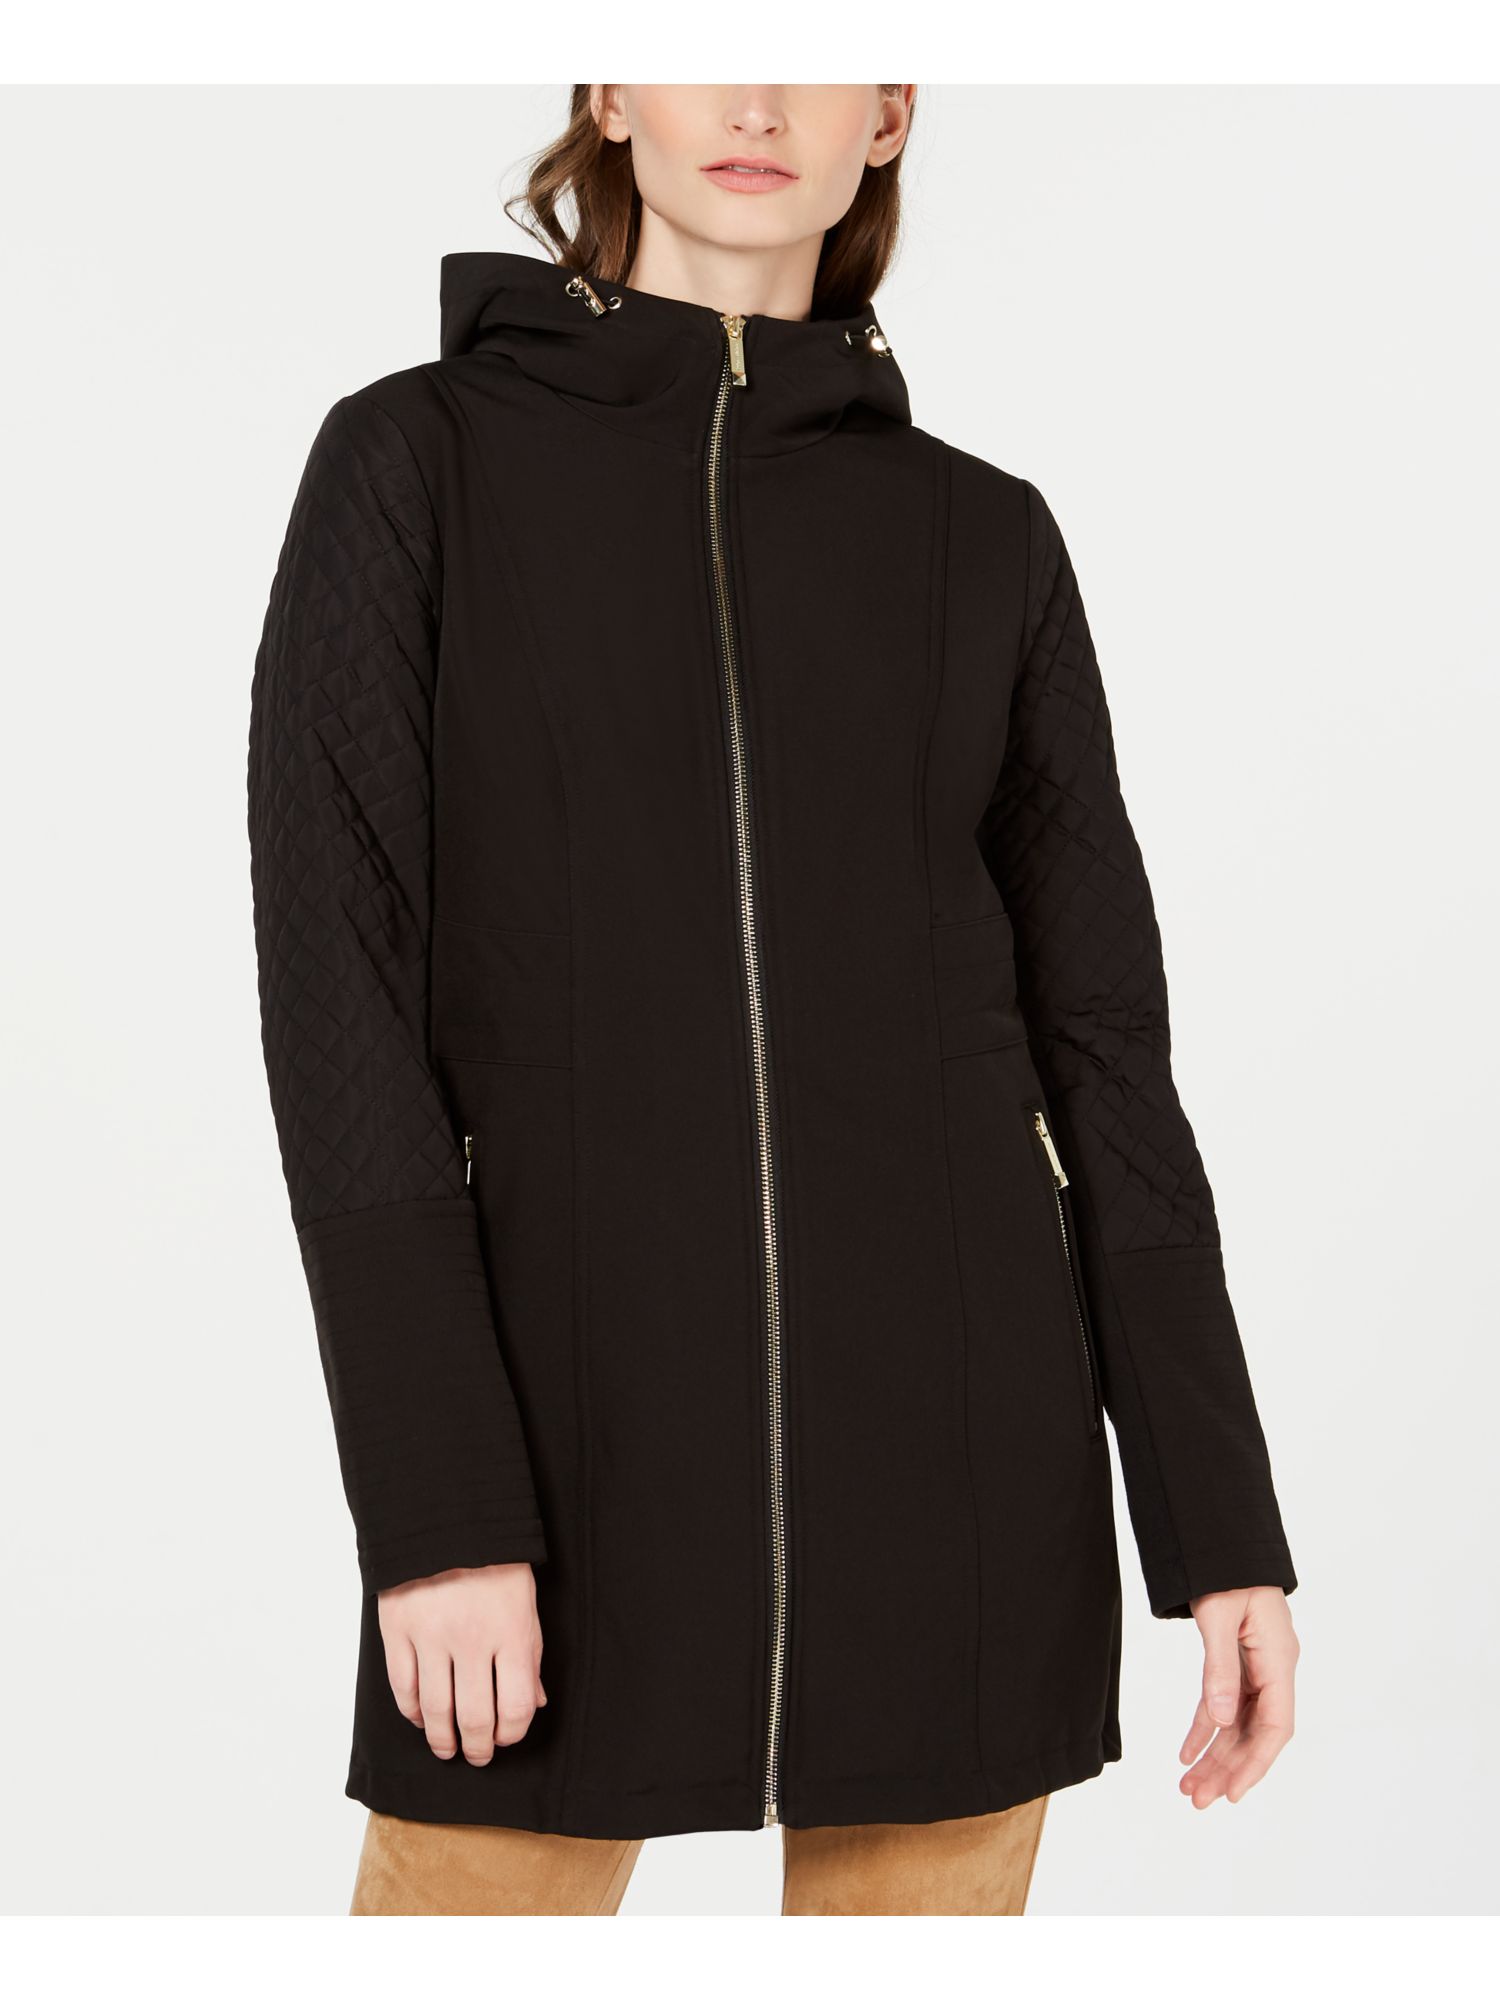 MICHAEL KORS Womens Black Zippered Hooded Raincoat Size: XXS